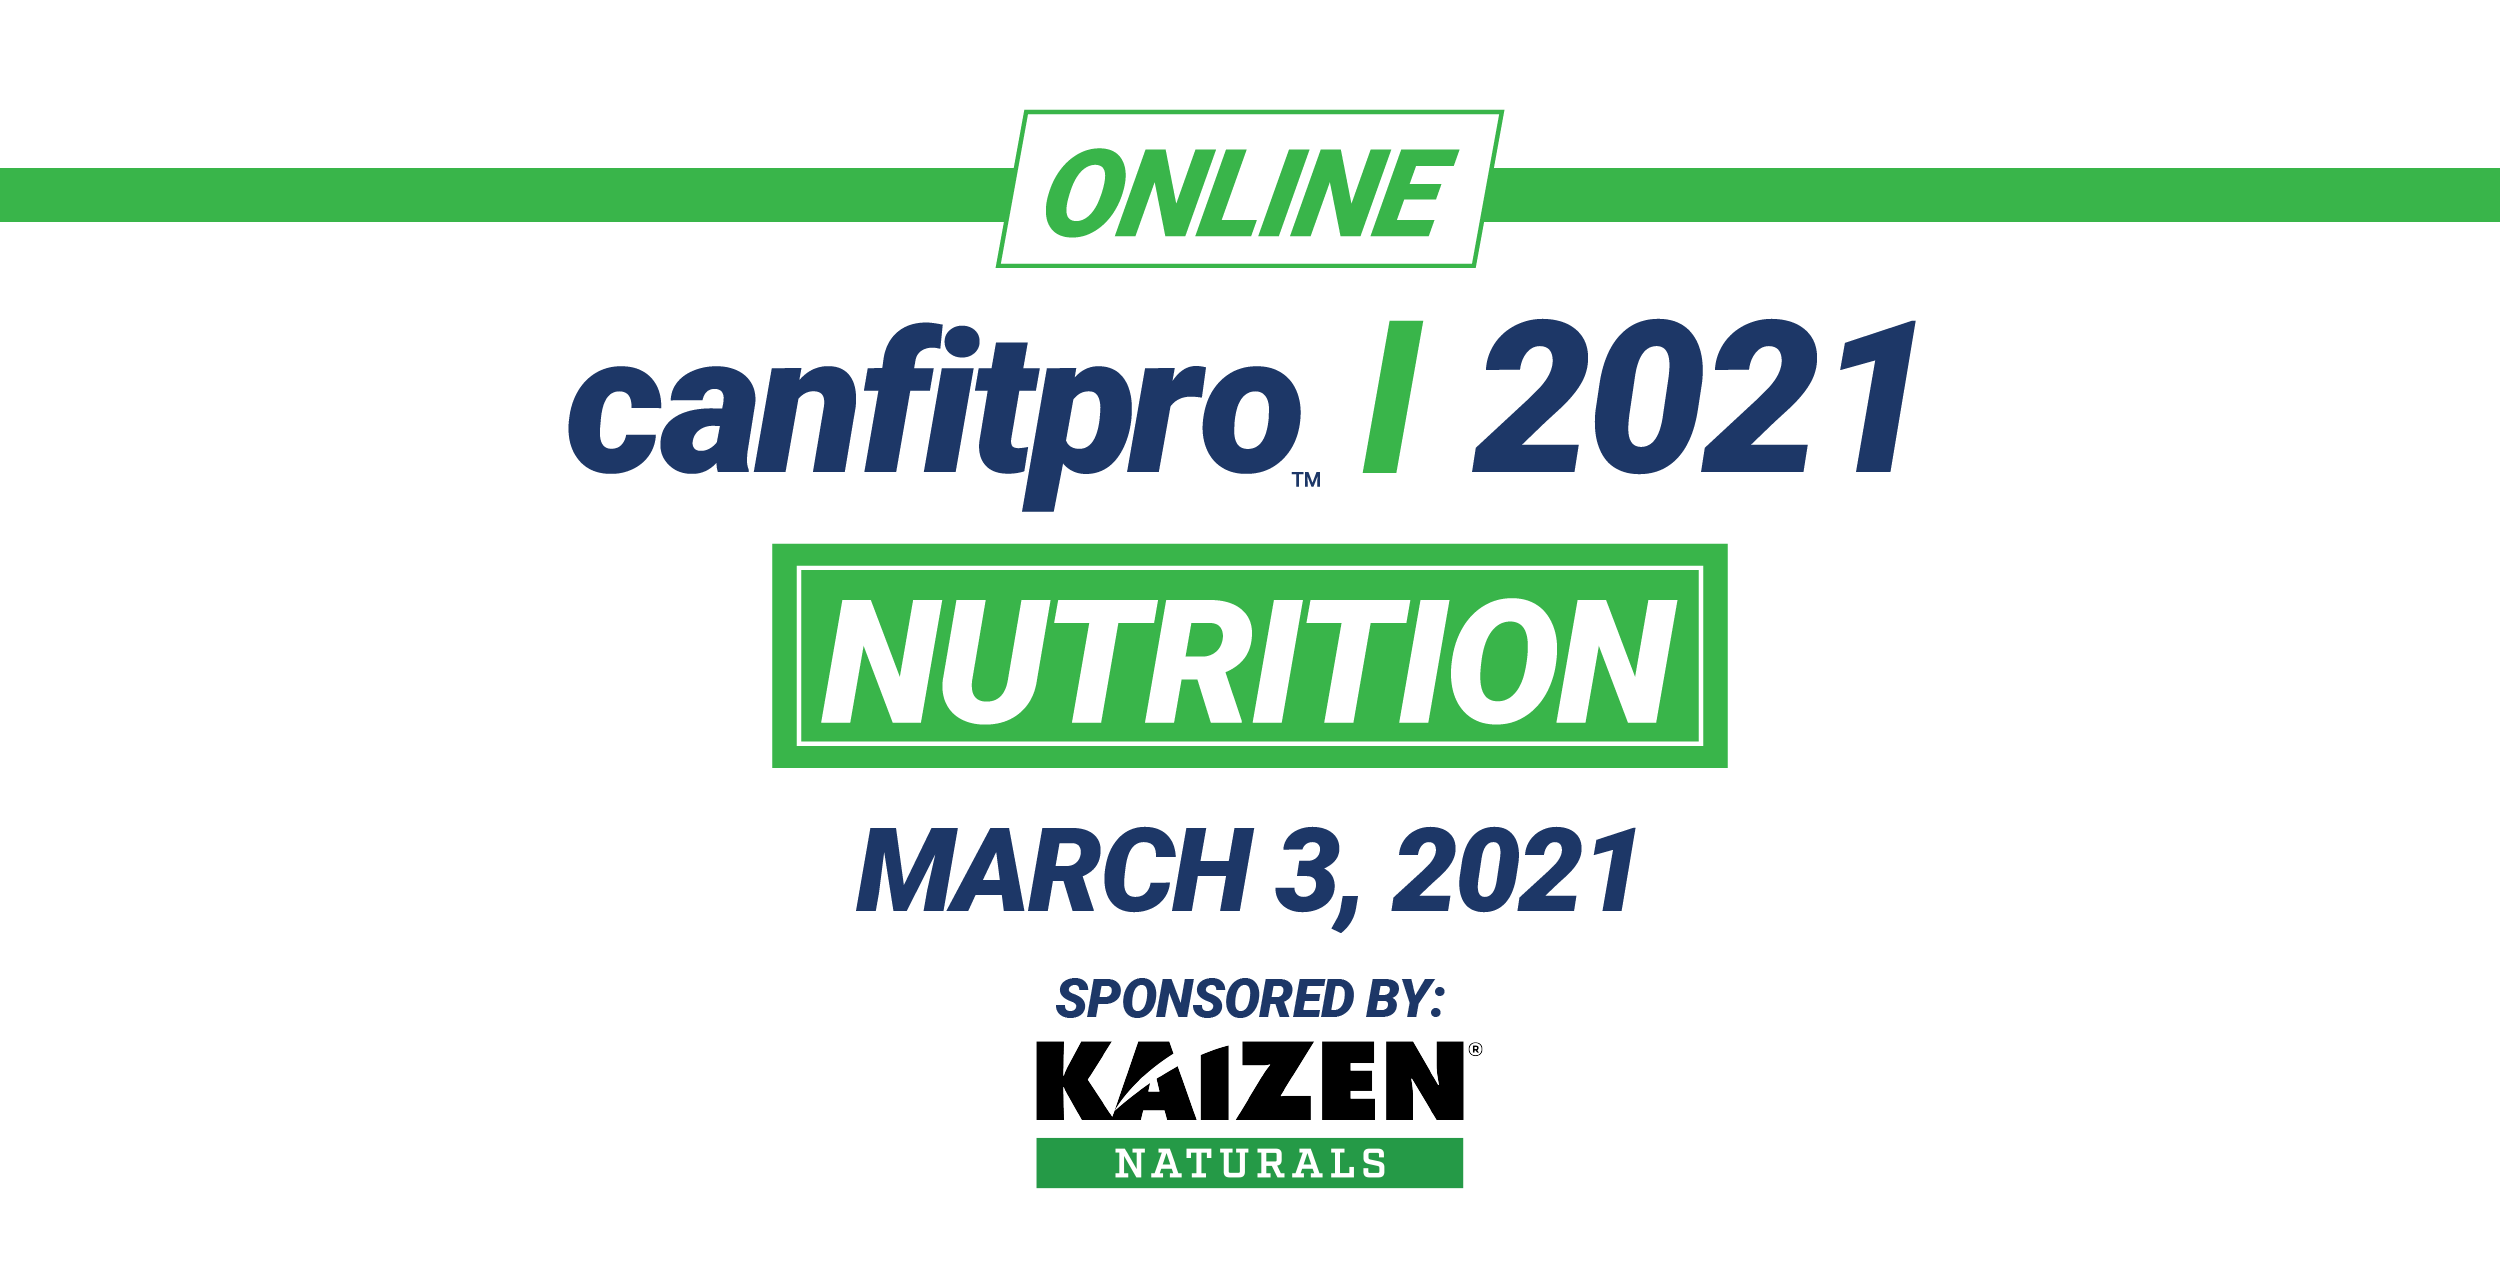 Canfitpro 2021 Online: Nutrition